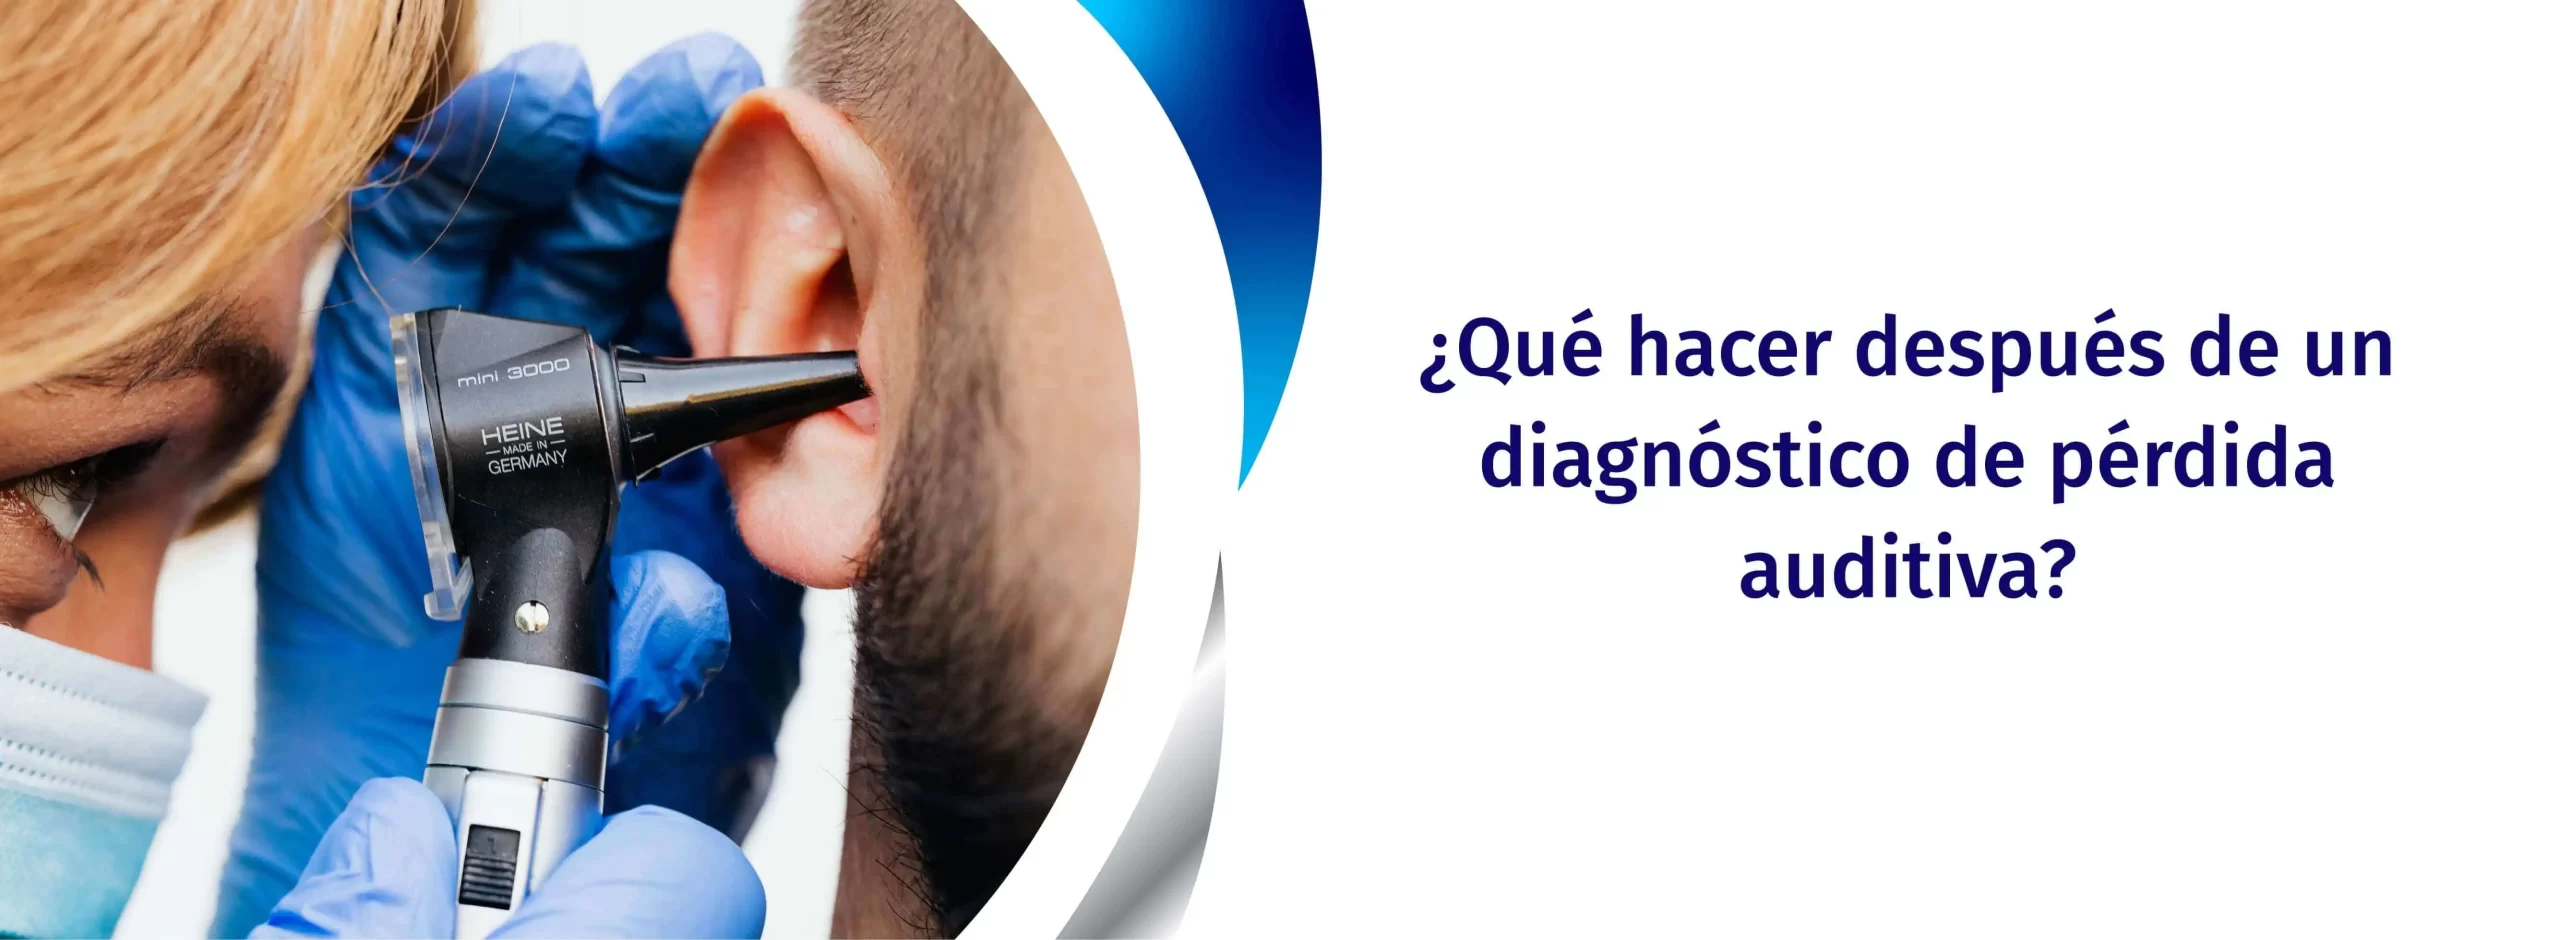 Diagnóstico de perdida auditiva